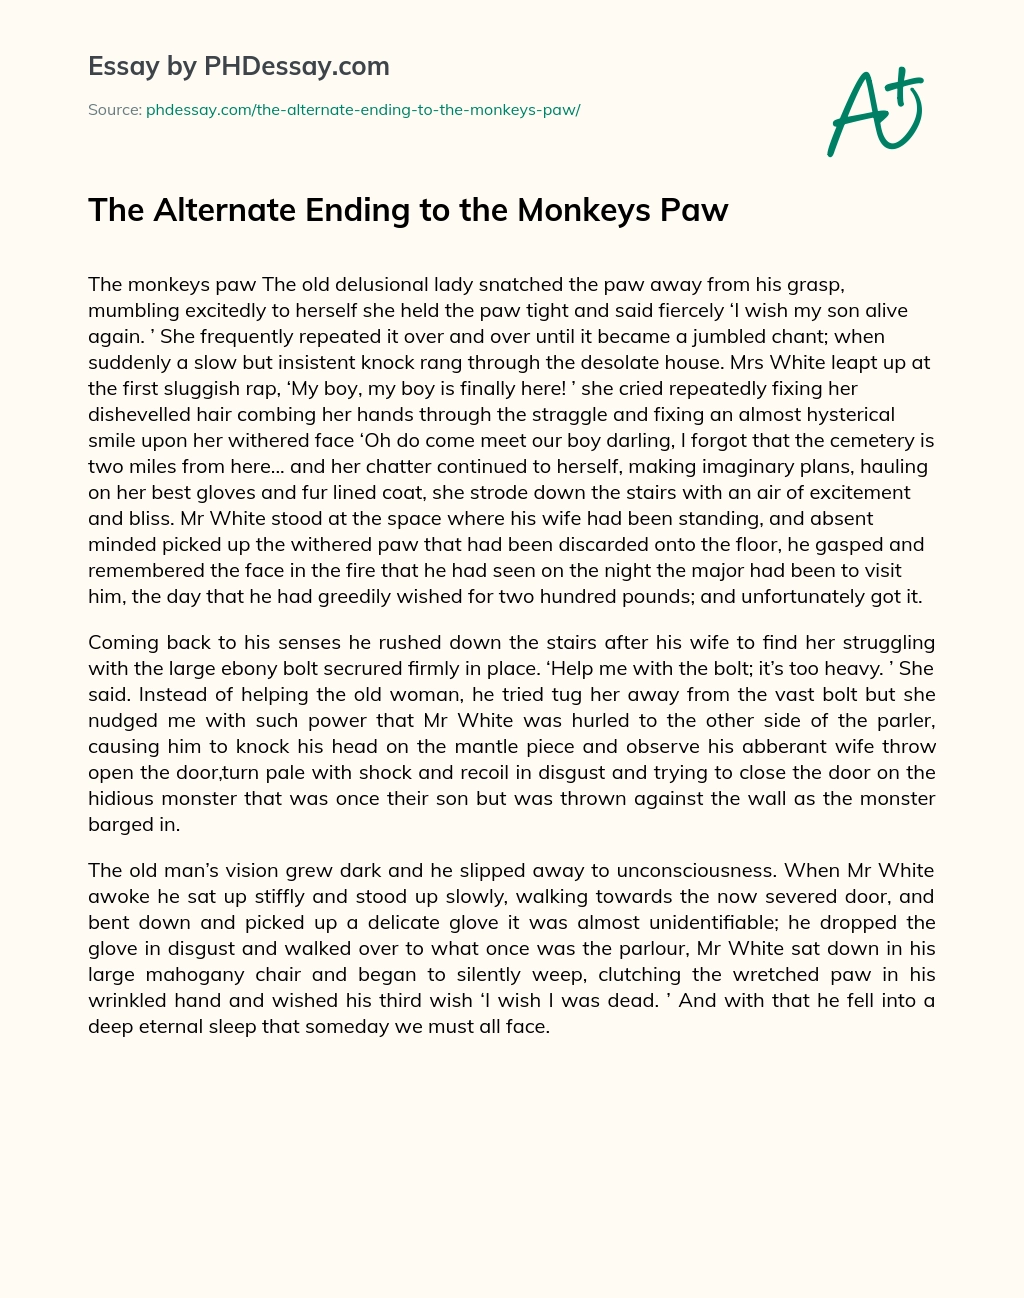 The Alternate Ending to the Monkeys Paw essay